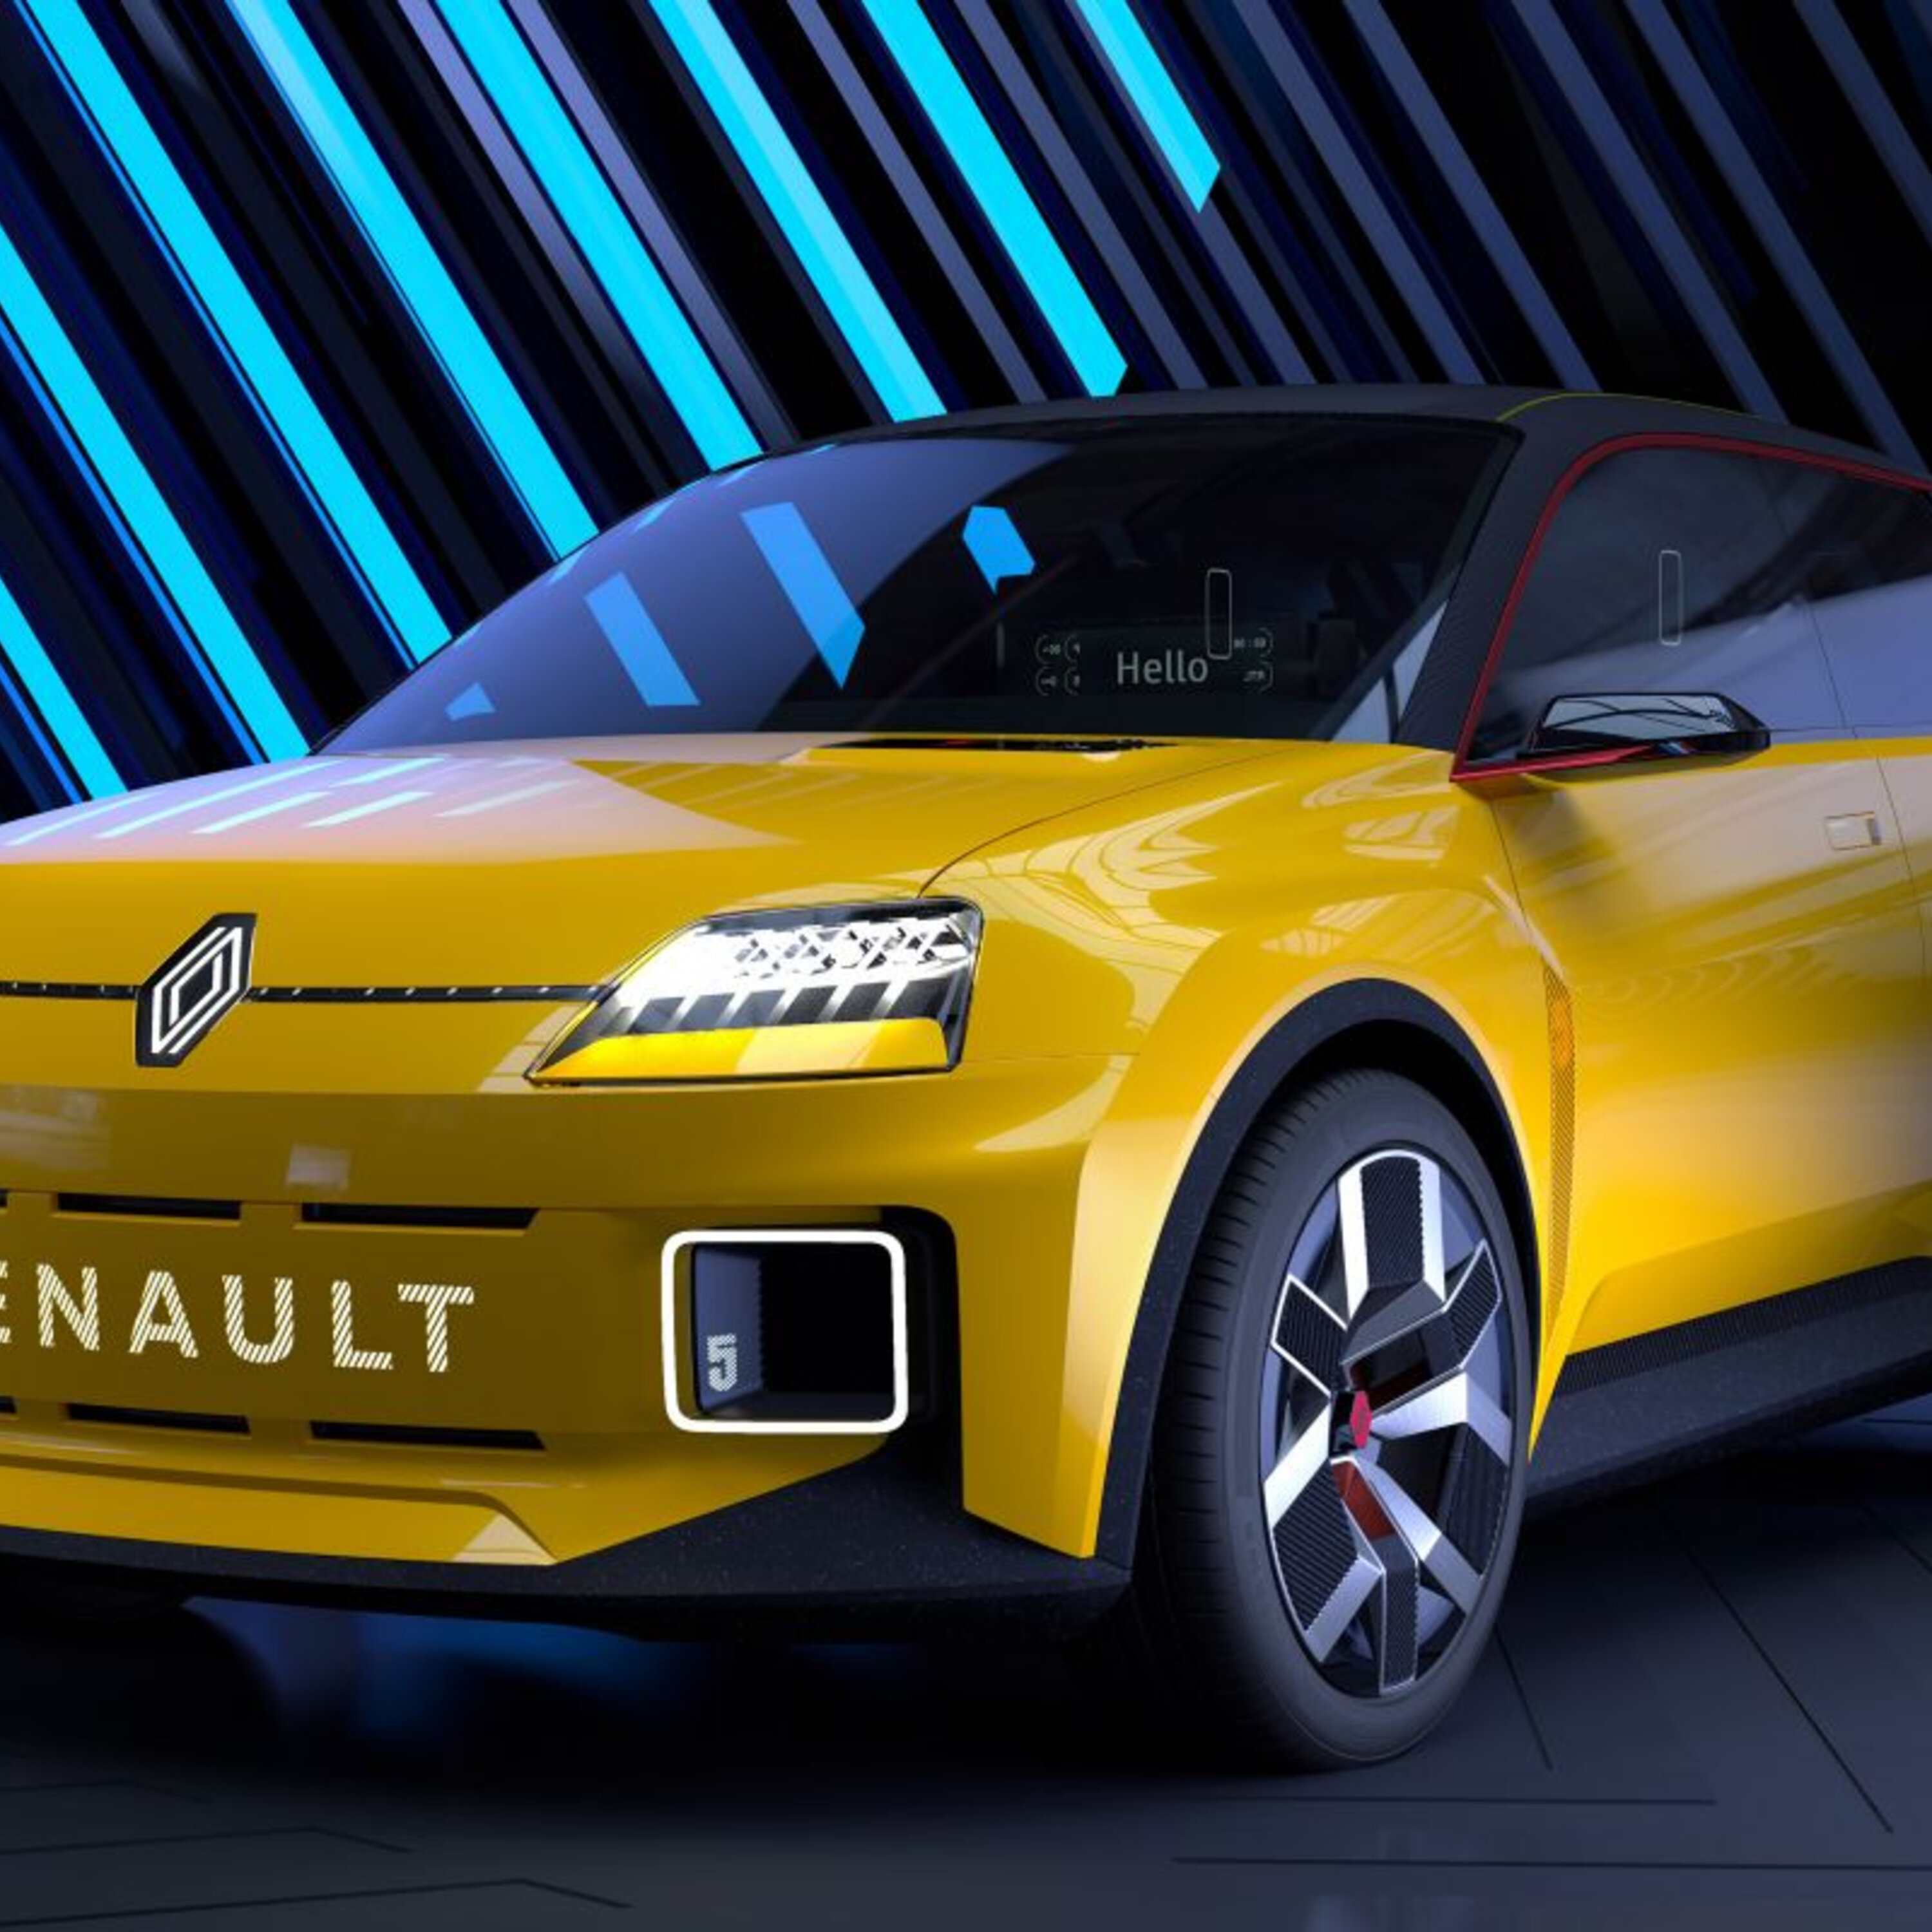 Aflevering 92 - De Renault 5